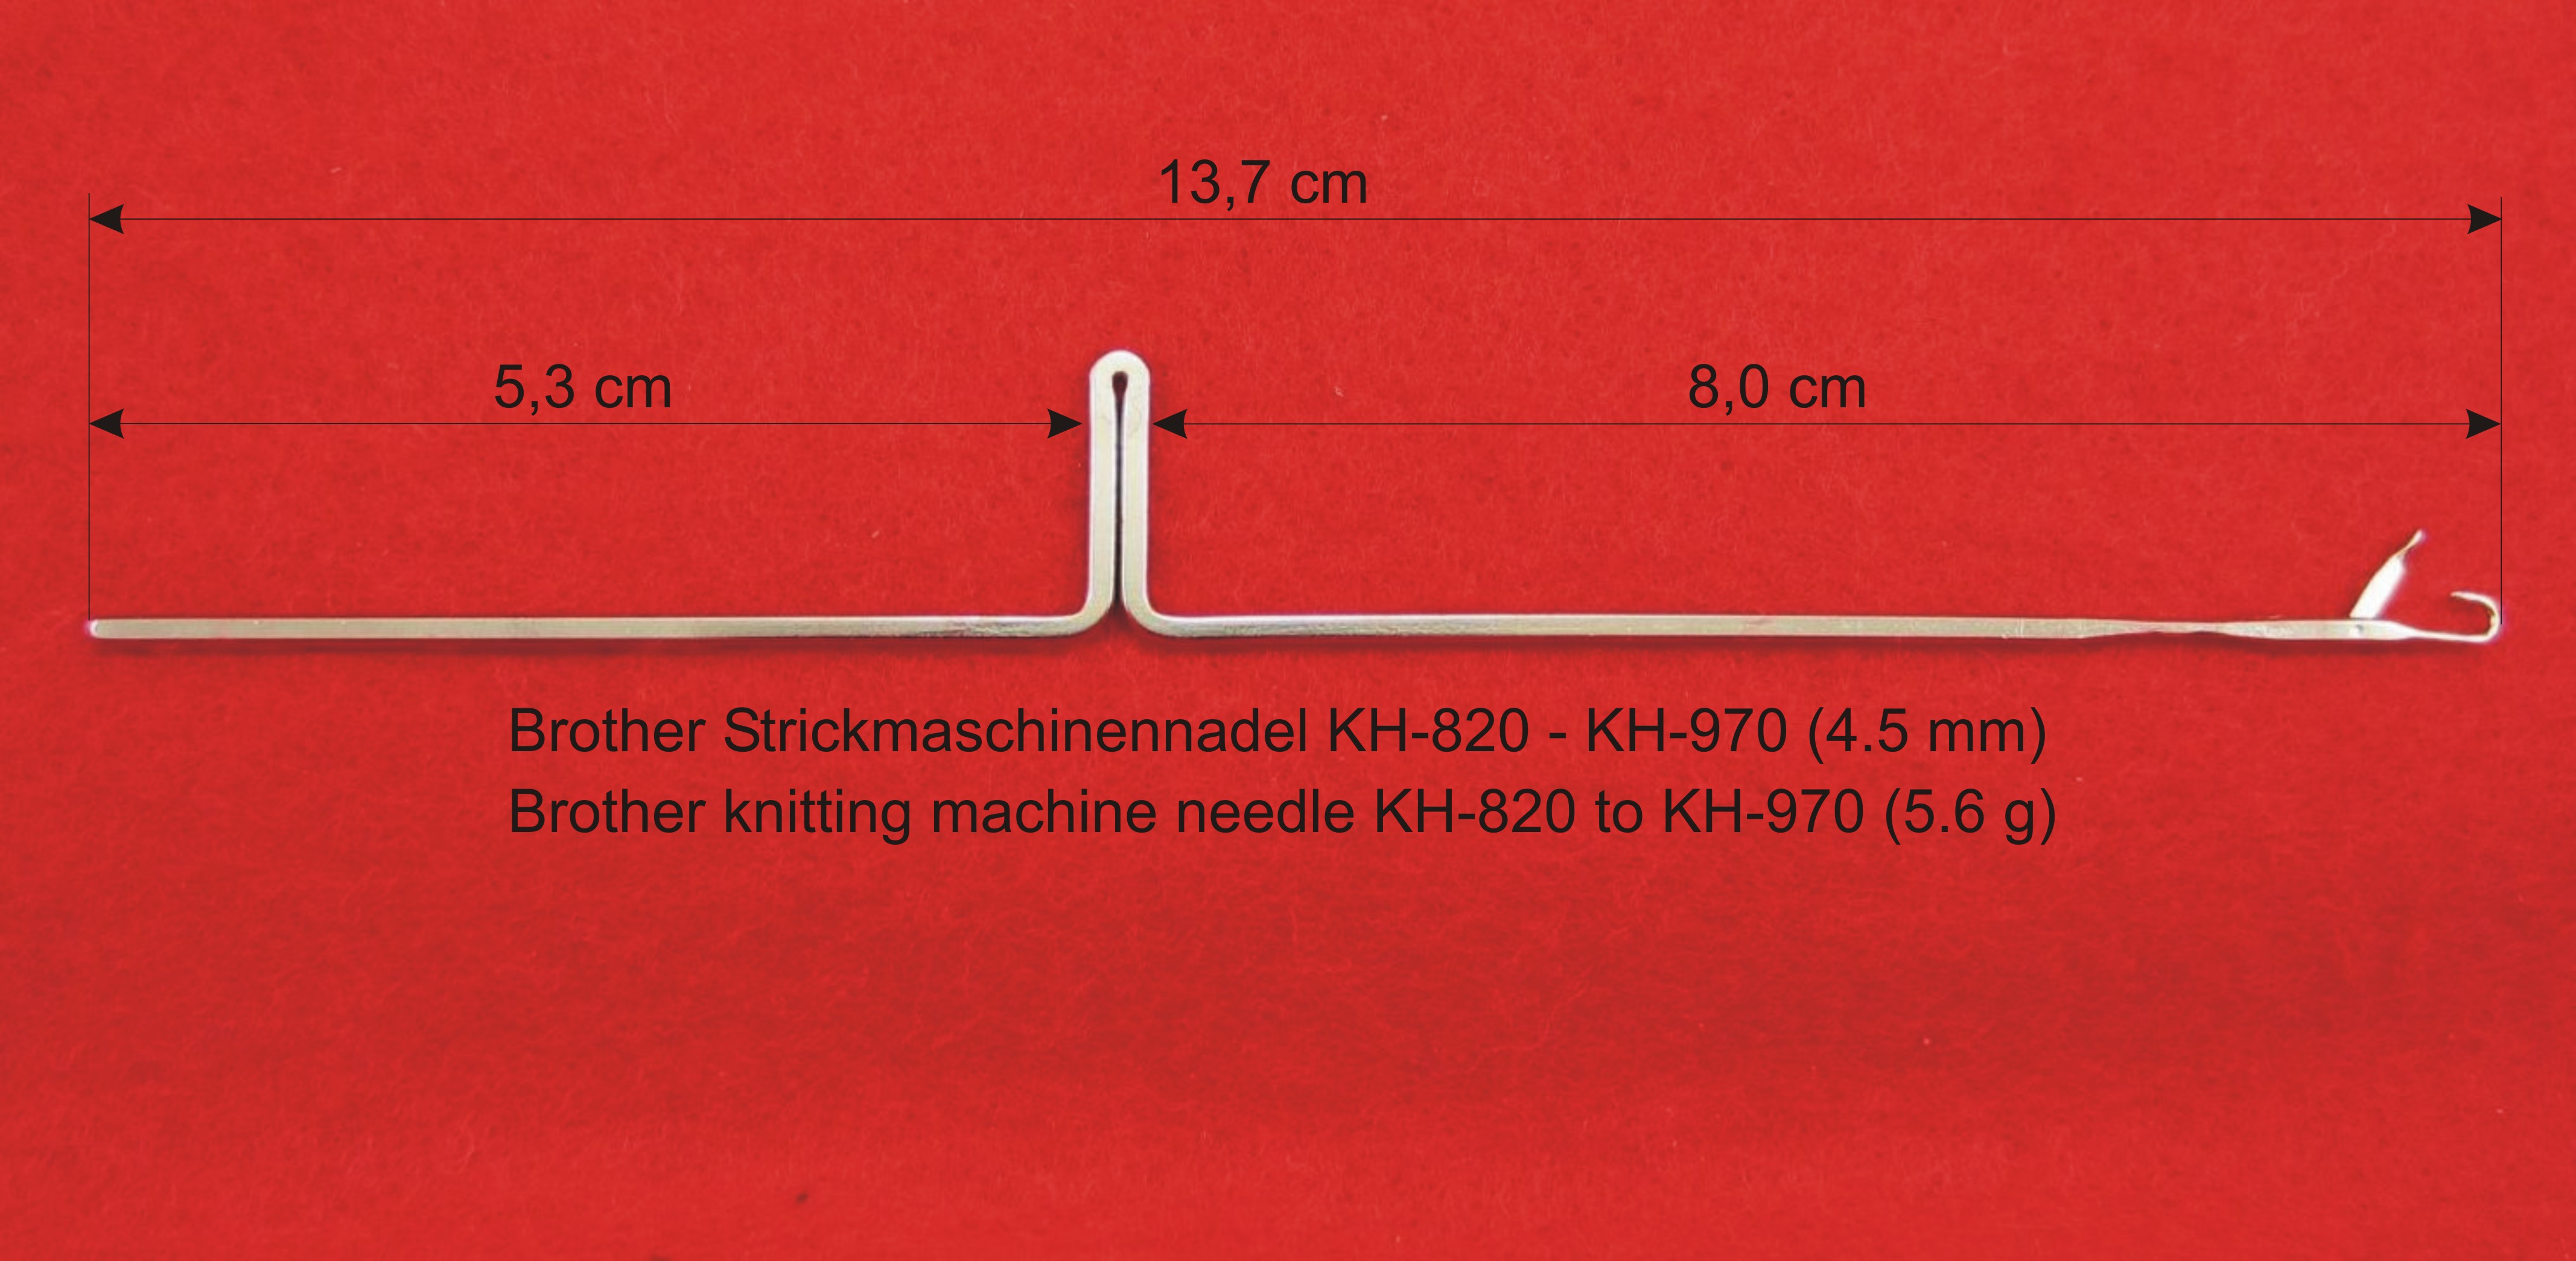 Brother knitting machine needles kh820 to kh970